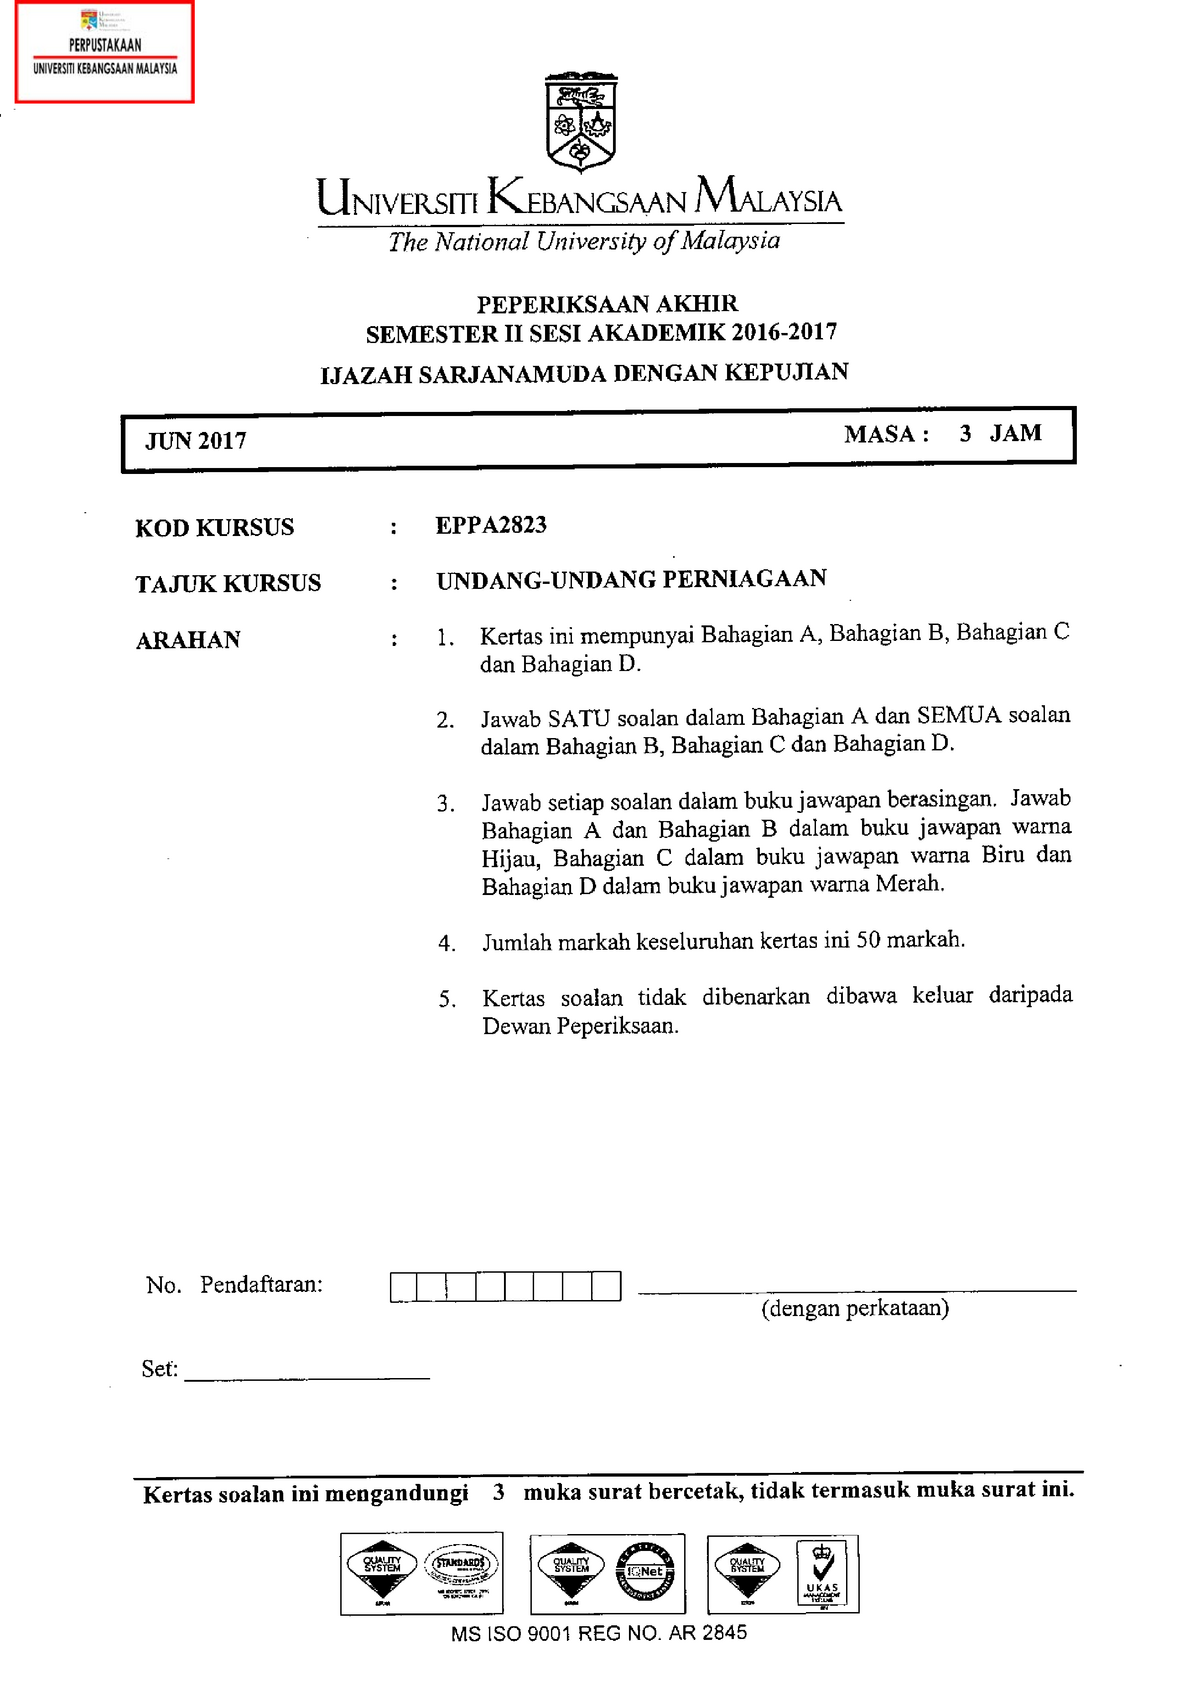 Eppa2823 Undang Undang Perniagaan V Univertsrrl Kebangsmn Malaysia The National University Of Studocu